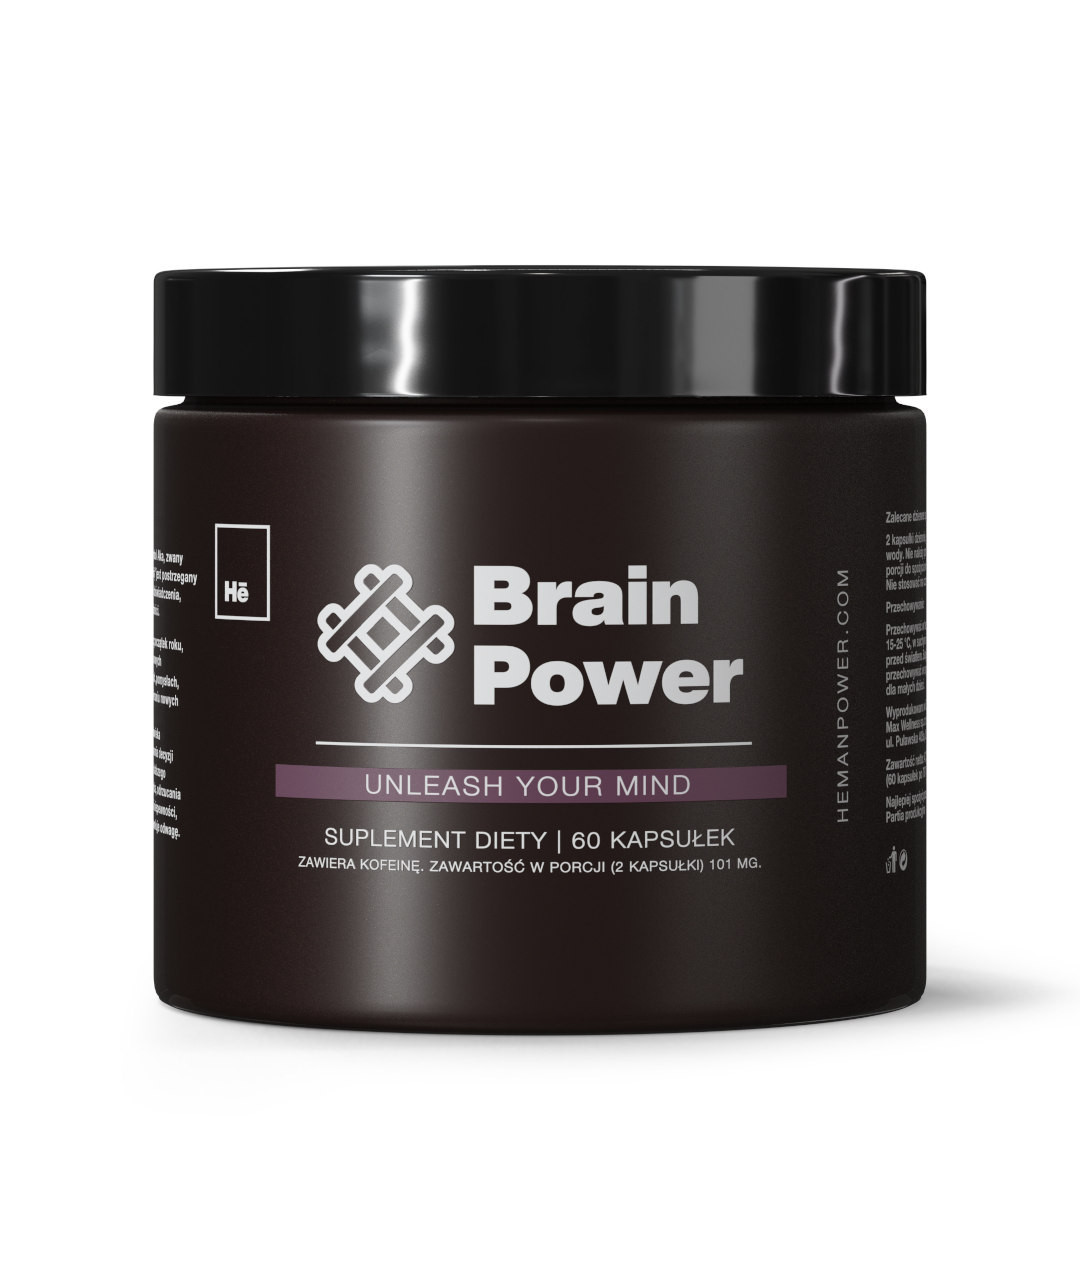 The Dopamine Detox: Balancing Brain Health Naturally – Mind Lab Pro®